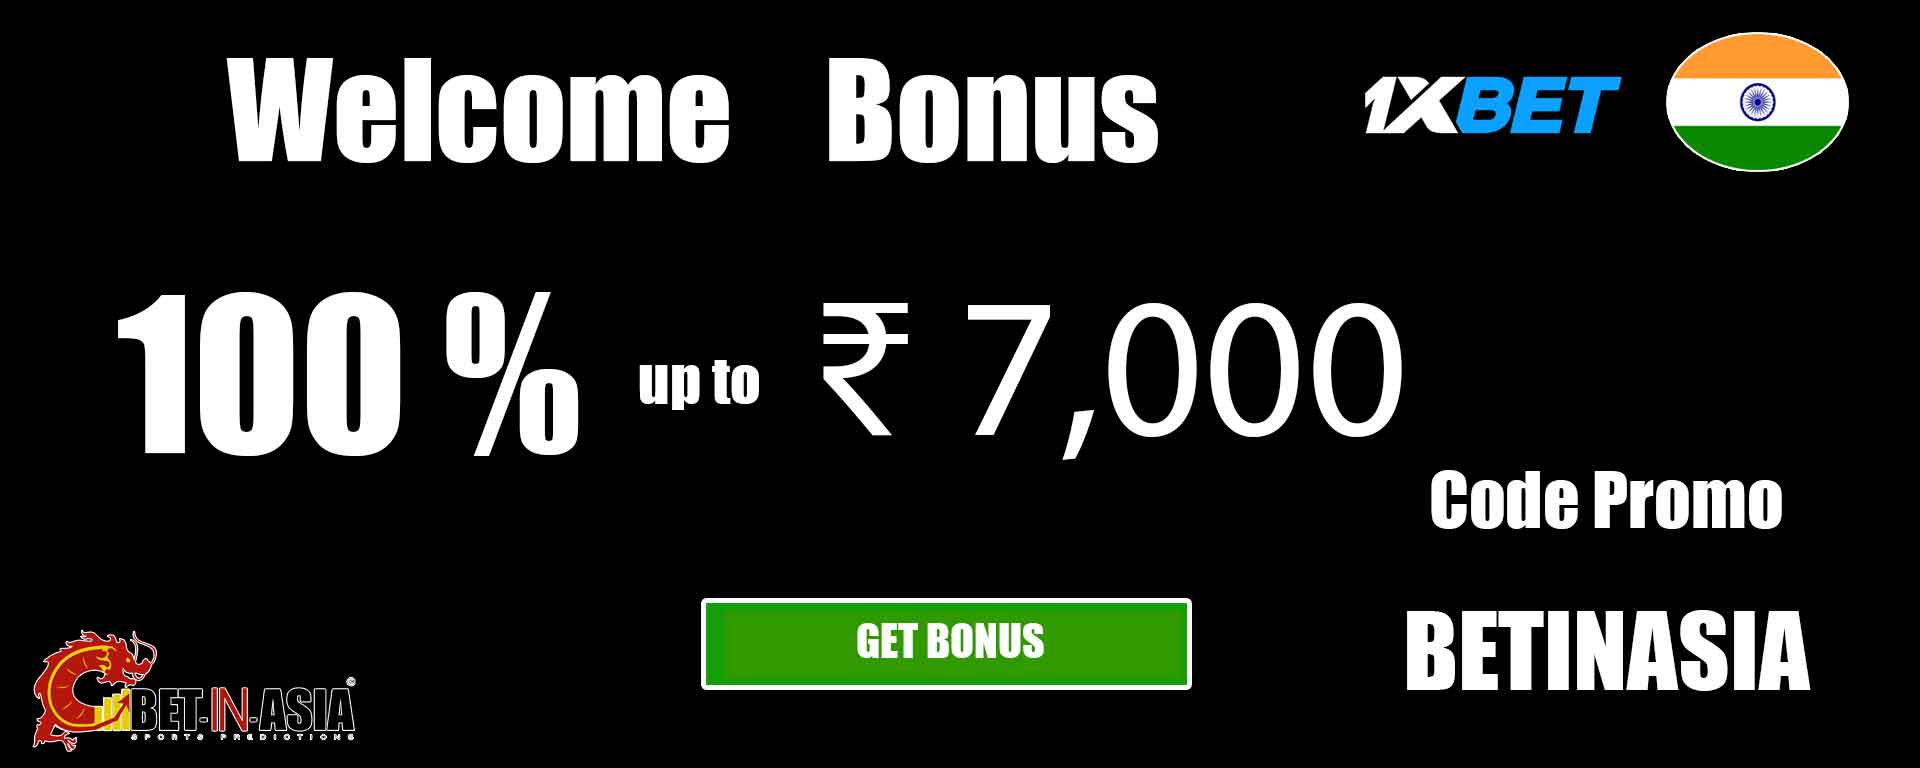 1xbet India welcome bonus 100 % on first deposit